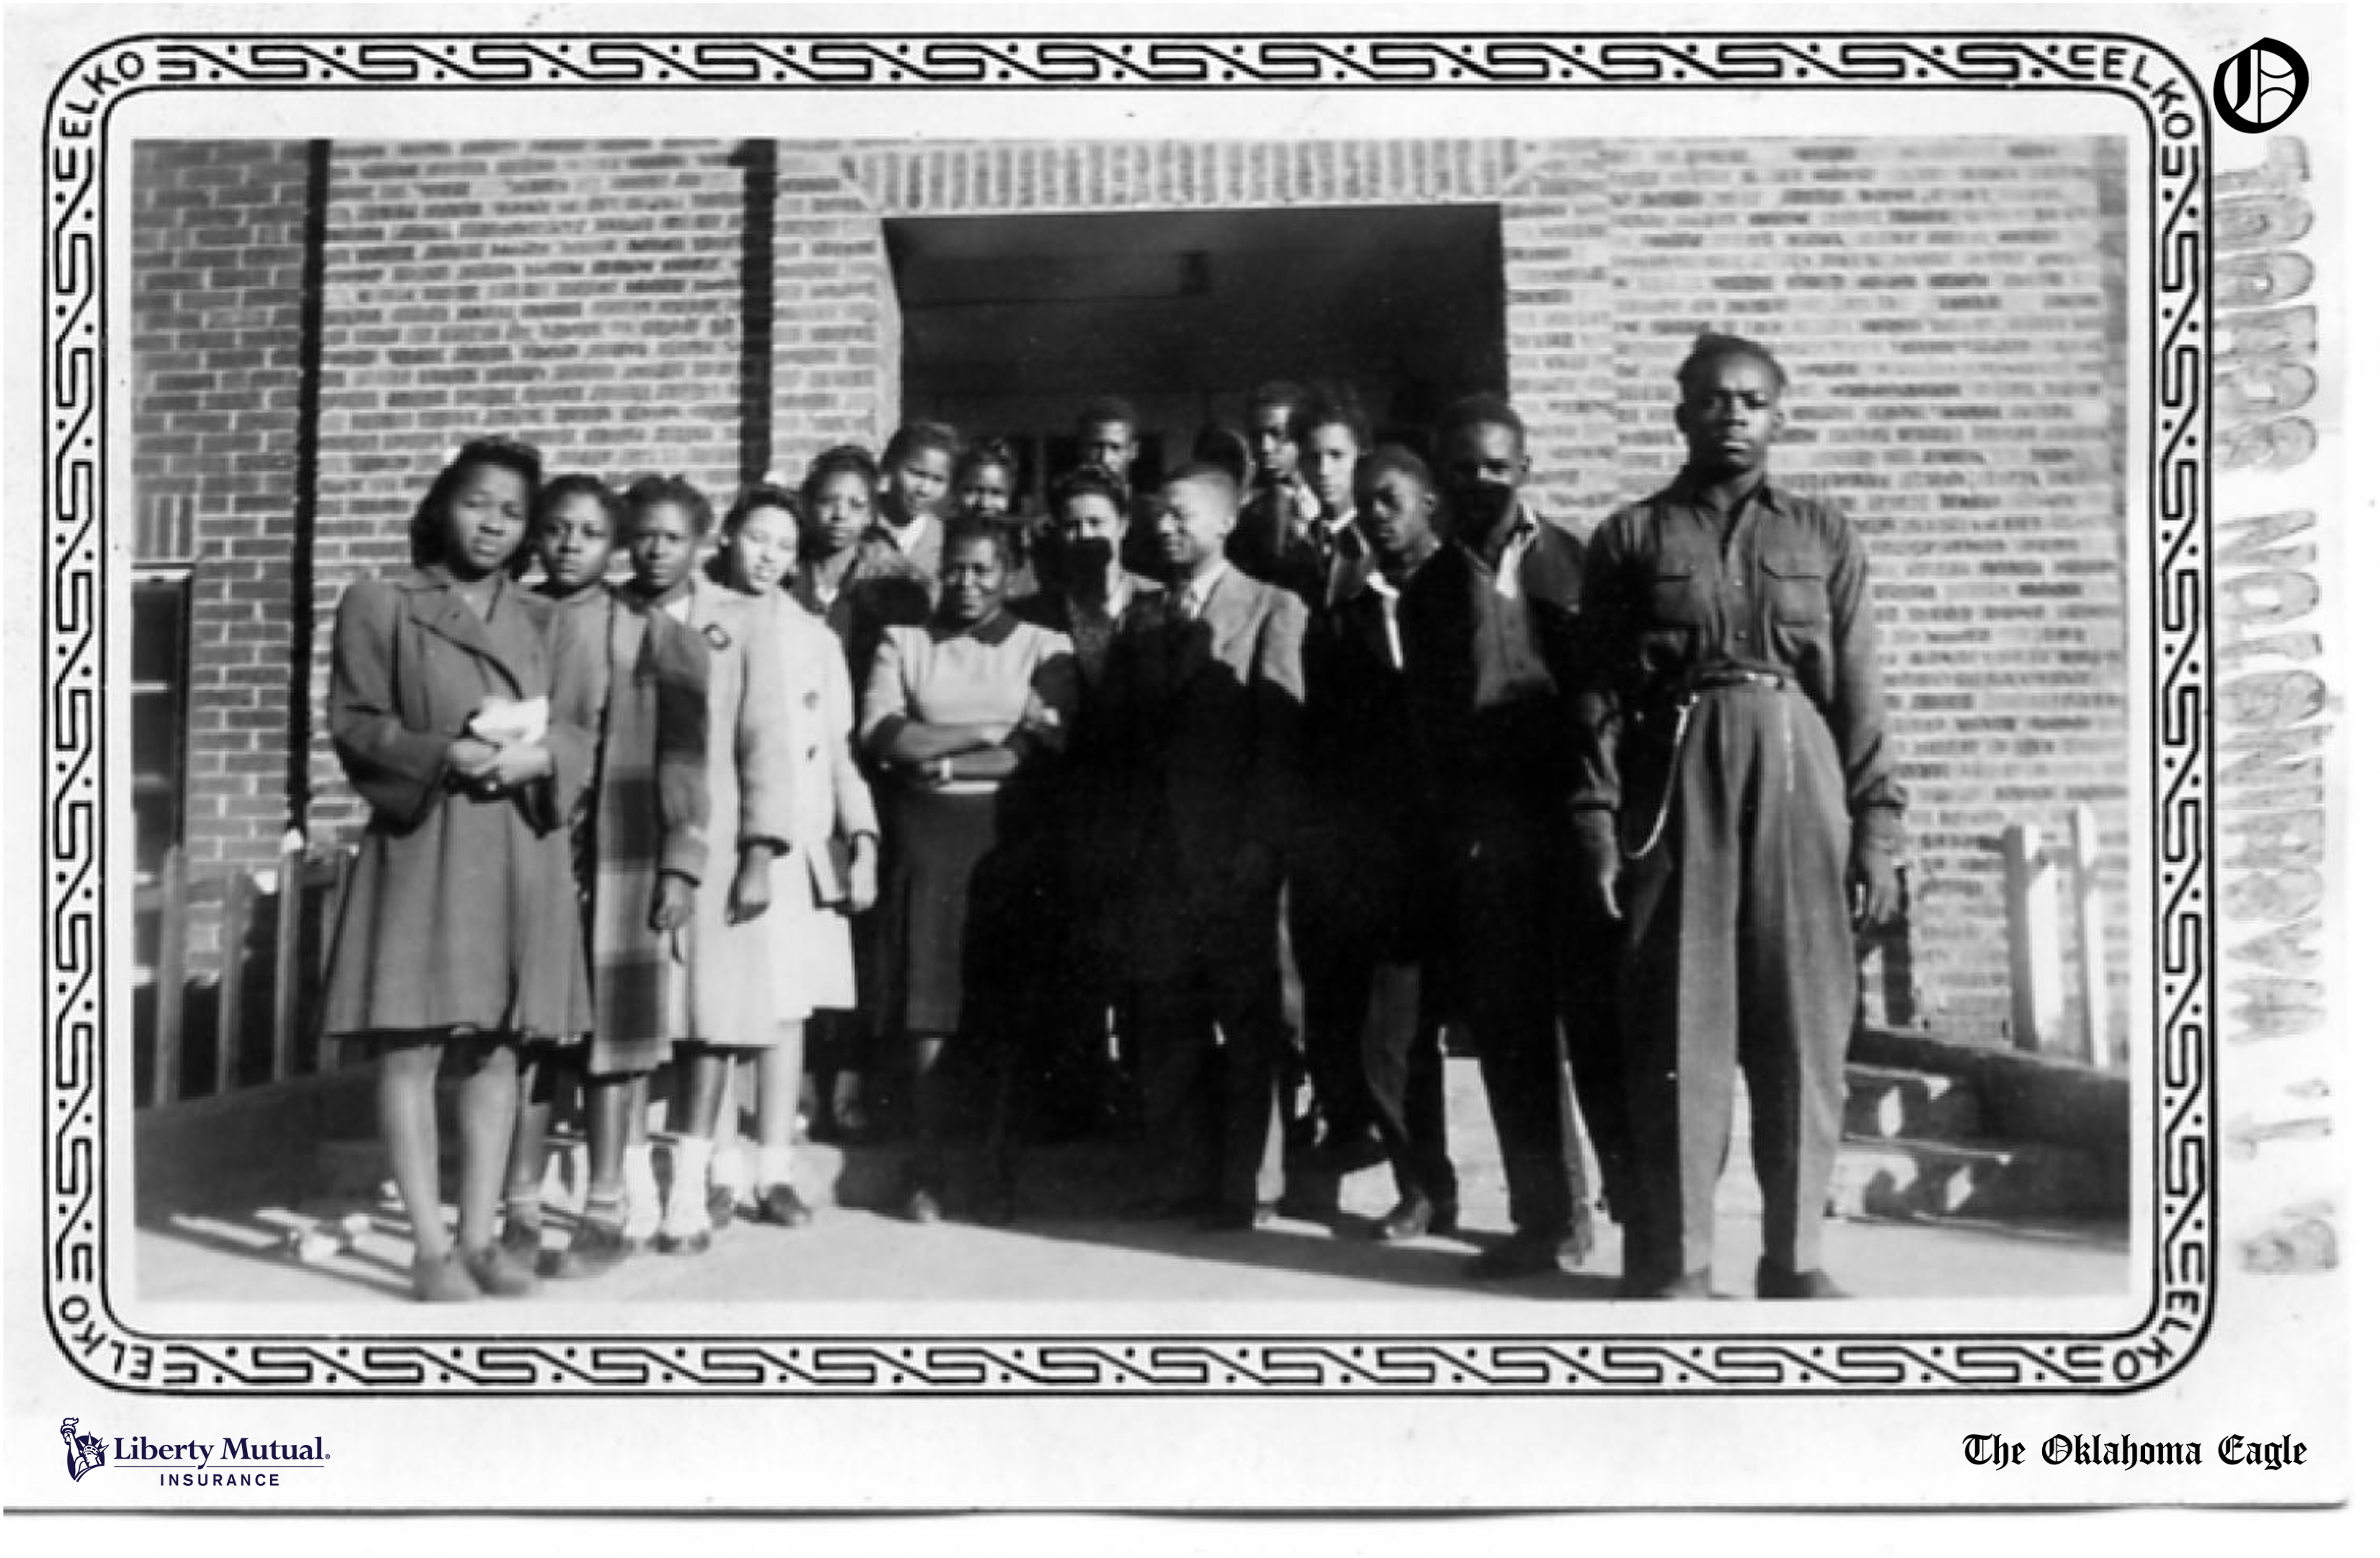 LIberty Mutual, The Oklahoma Eagle, Tulsa, Oklahoma, African American History, Black History, Black Wall Street, Race Massacre, Booker T Washington High School